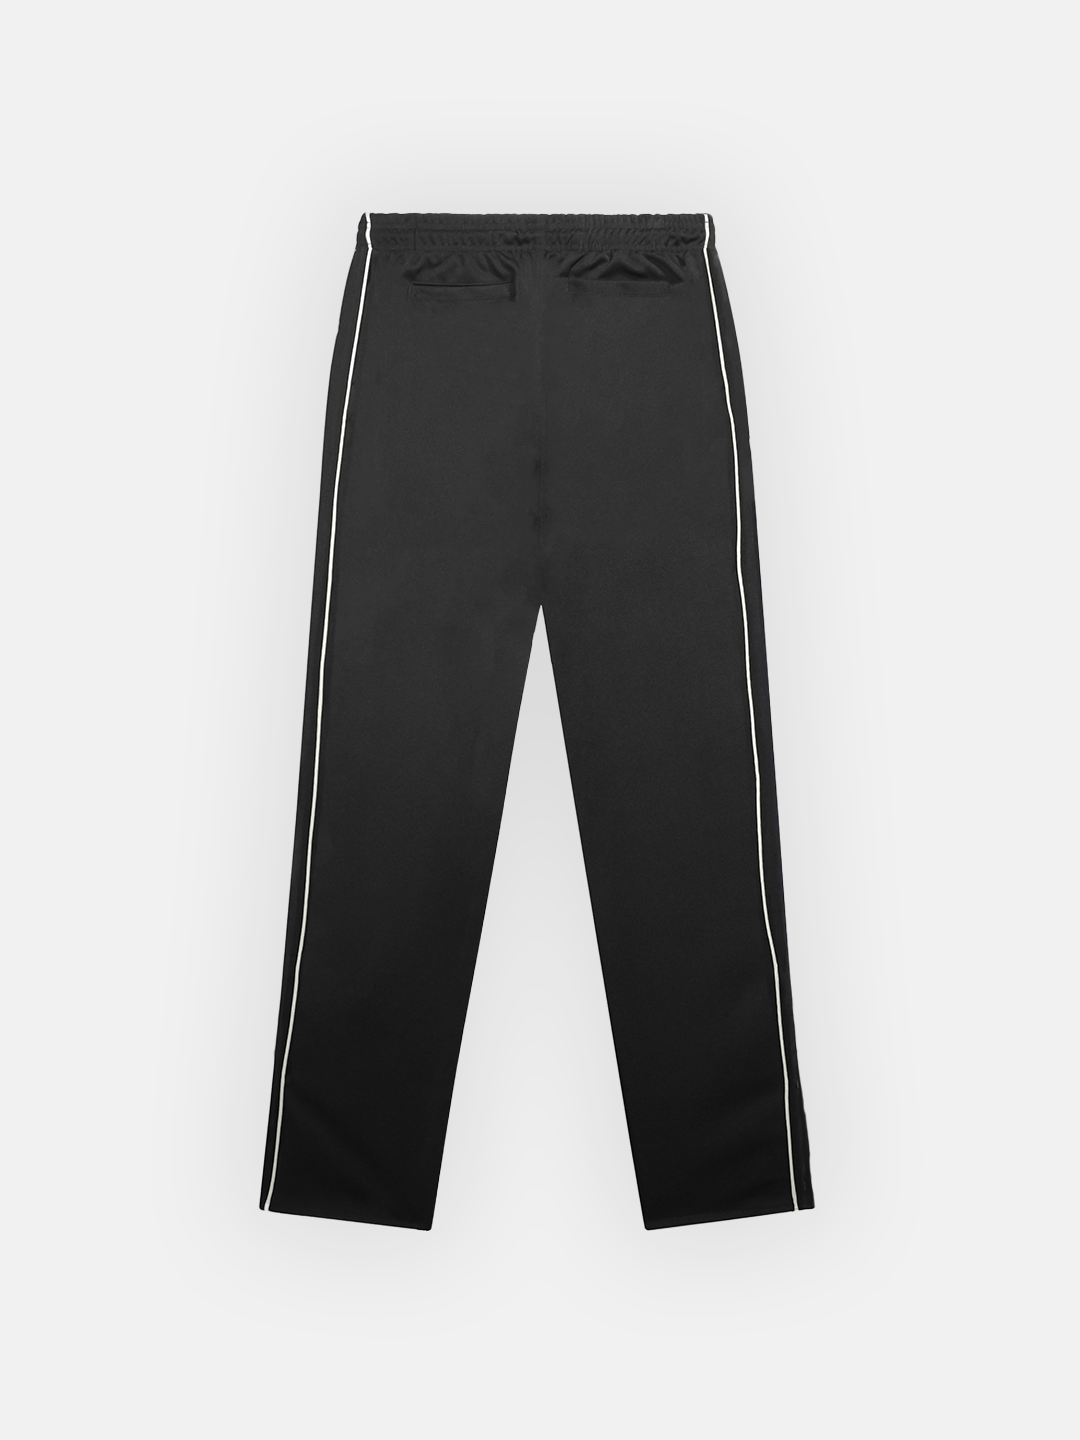 Adicolor Classics Firebird Track Pants in Black - Glue Store